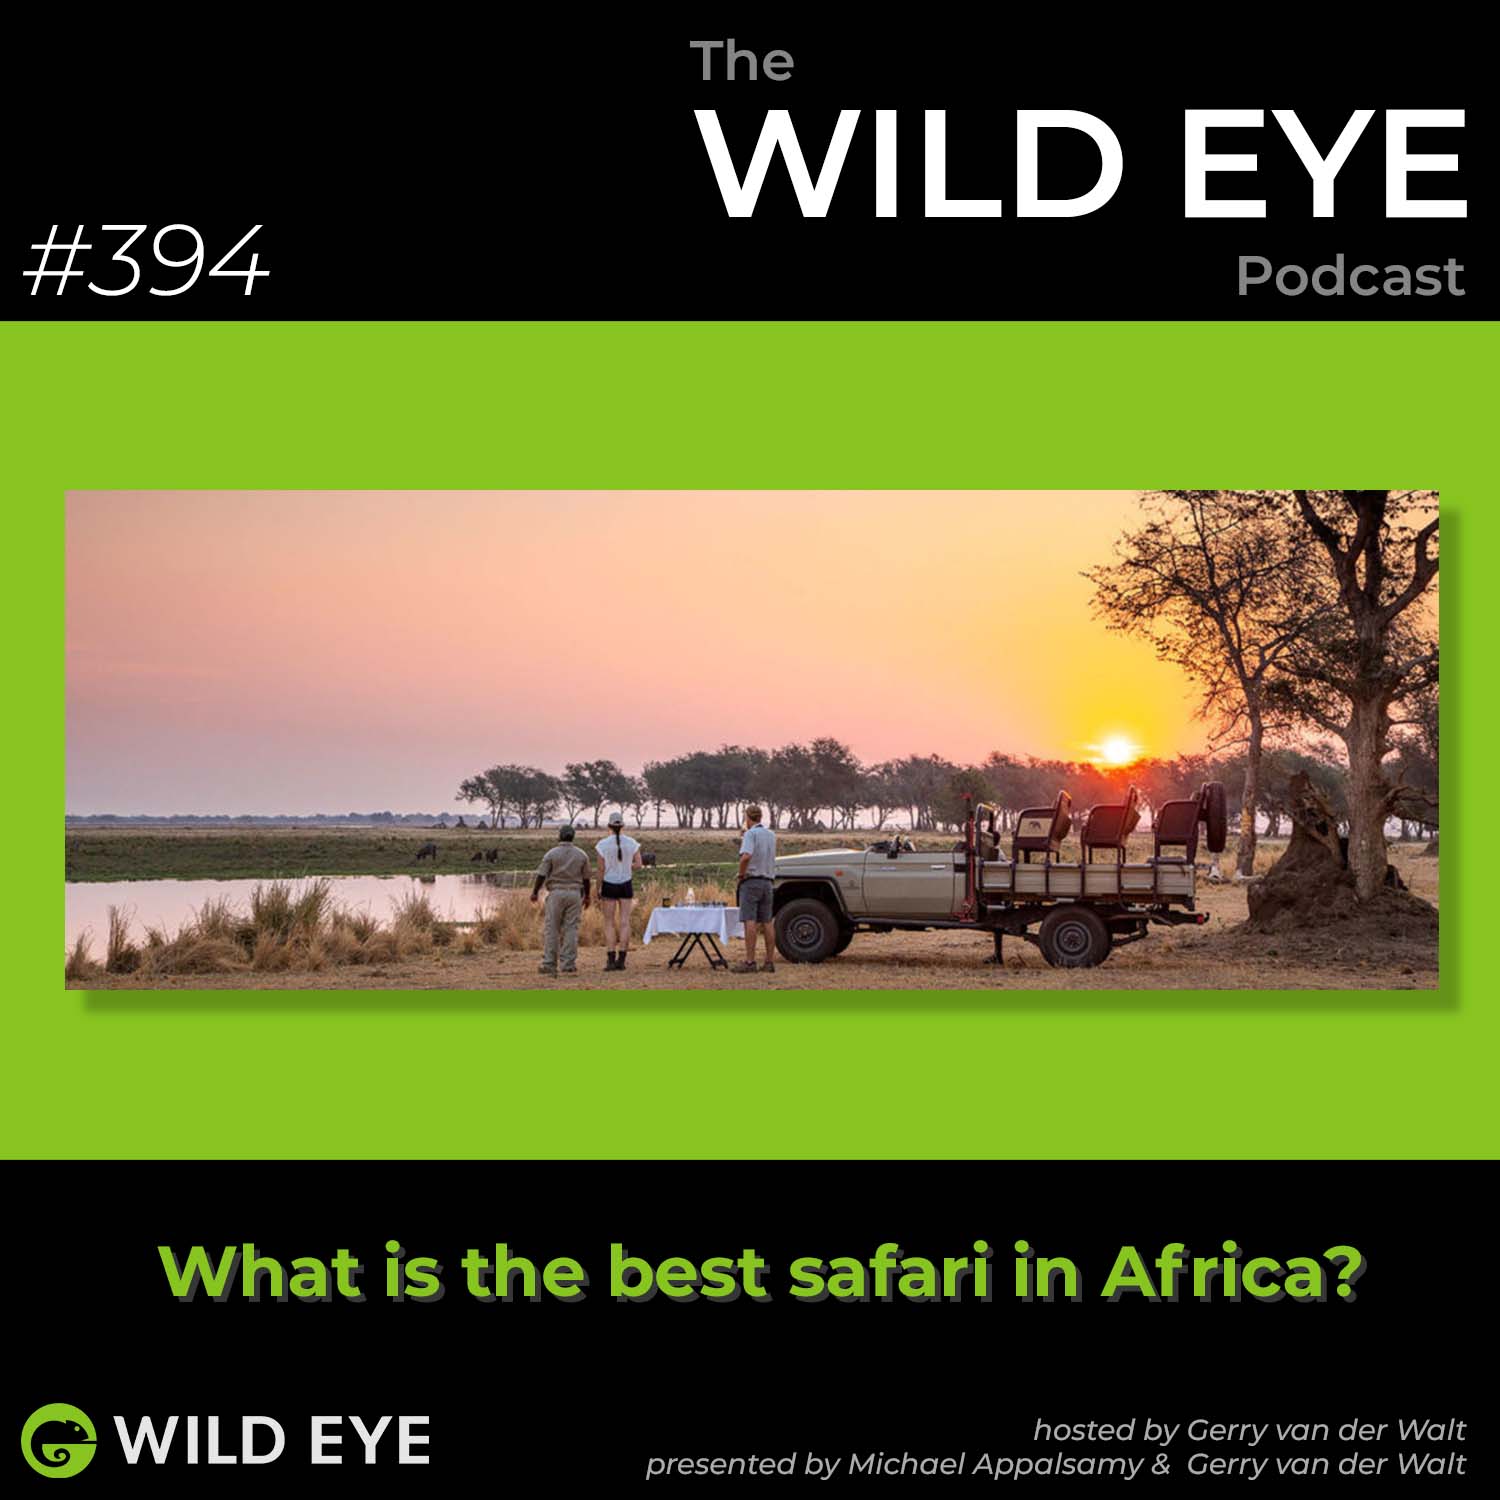 Artwork for podcast The Wild Eye Podcast